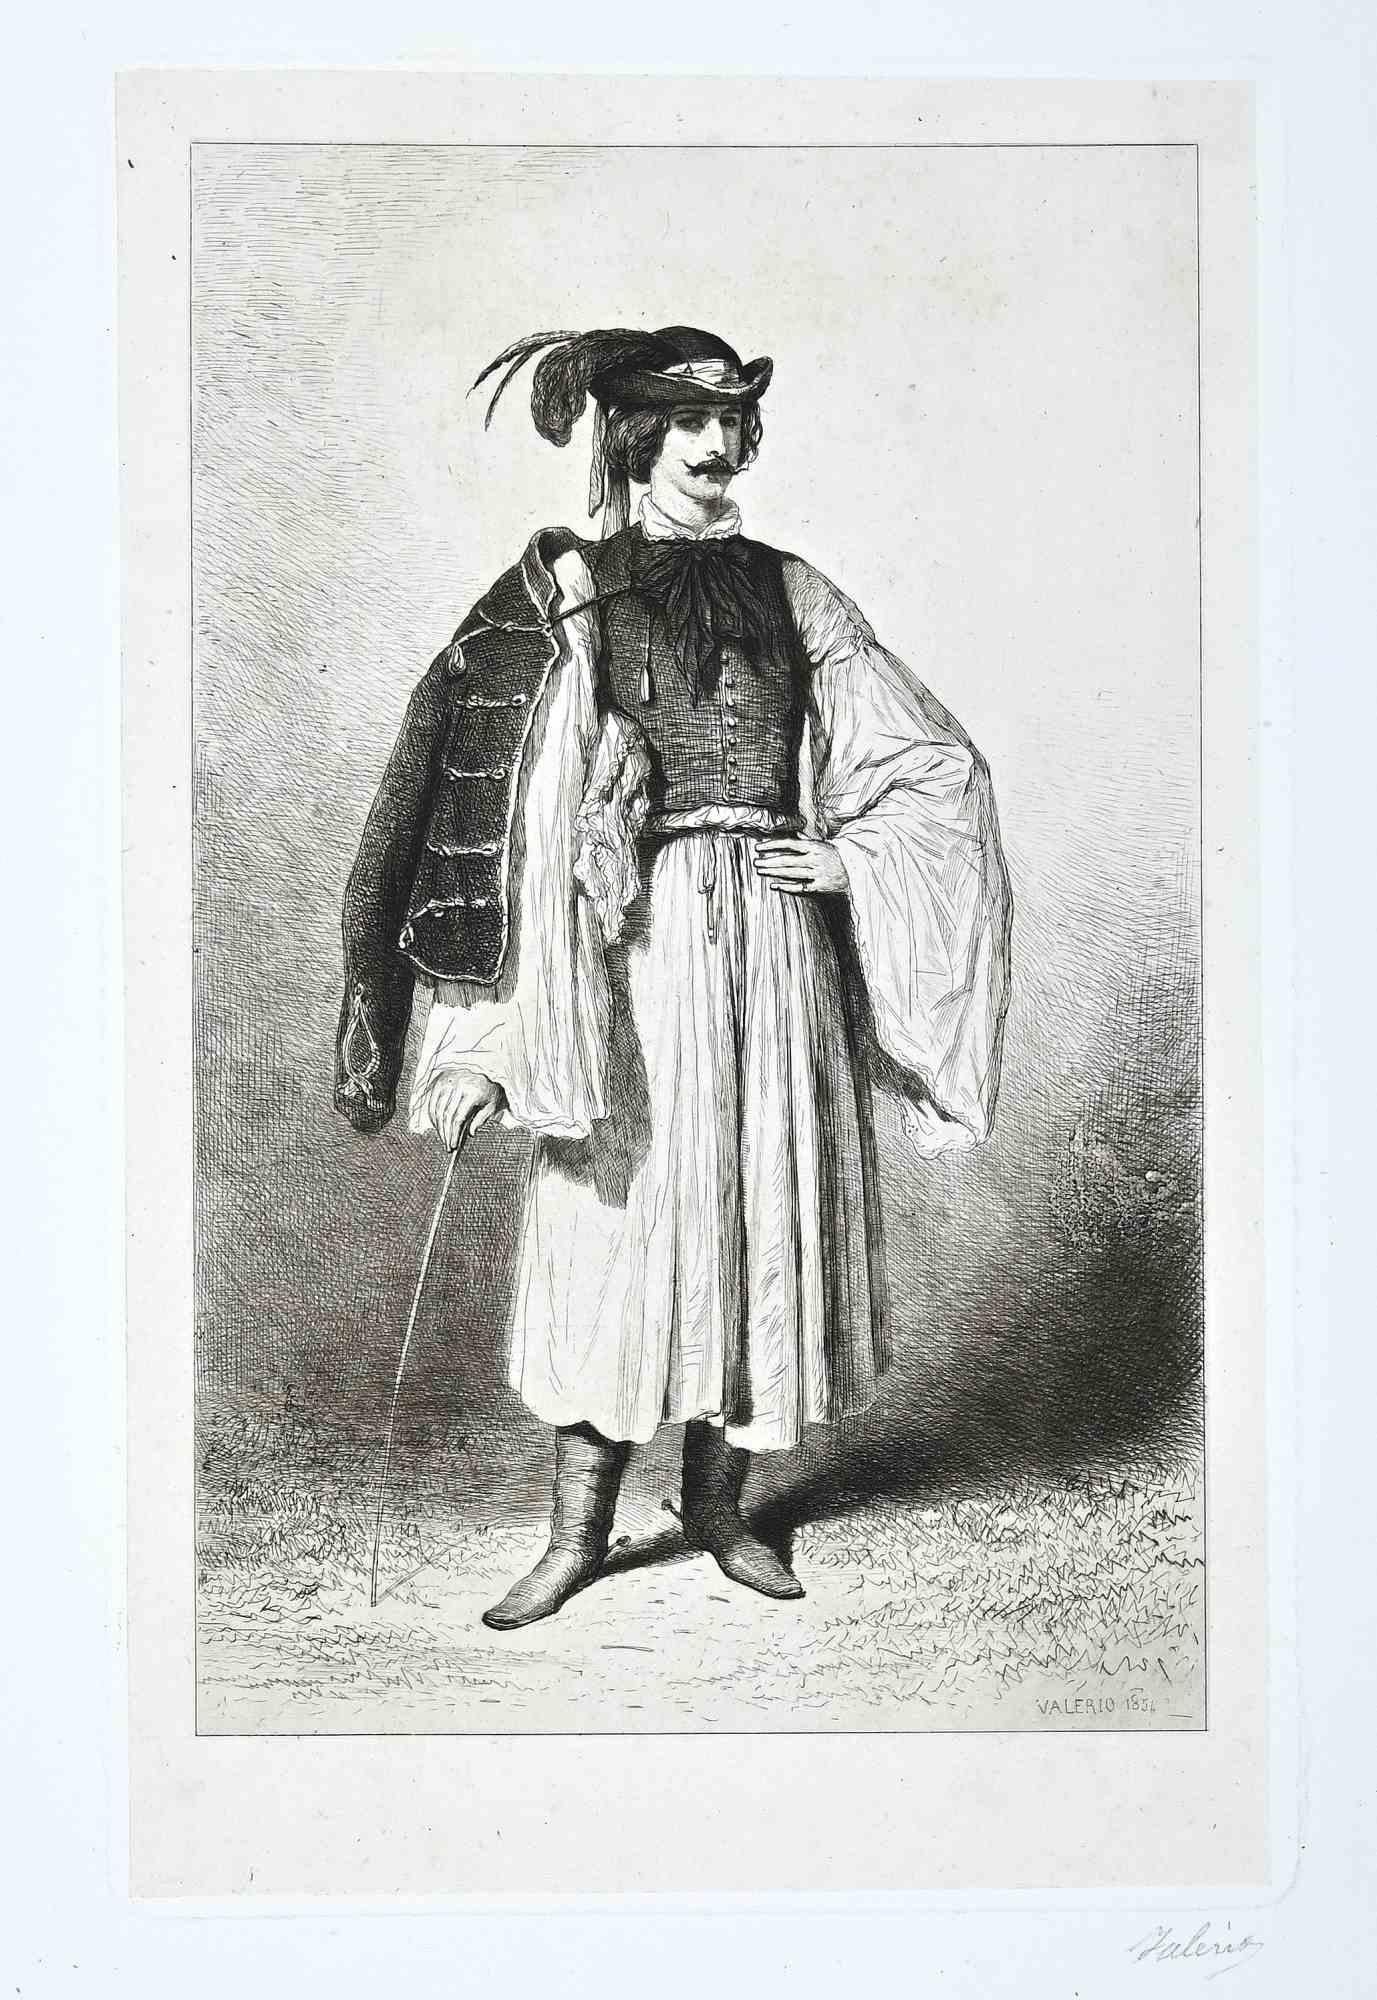 Theodore Valerio Figurative Print - Serbian Musician - Original Etching by Théodore Valério - 1854